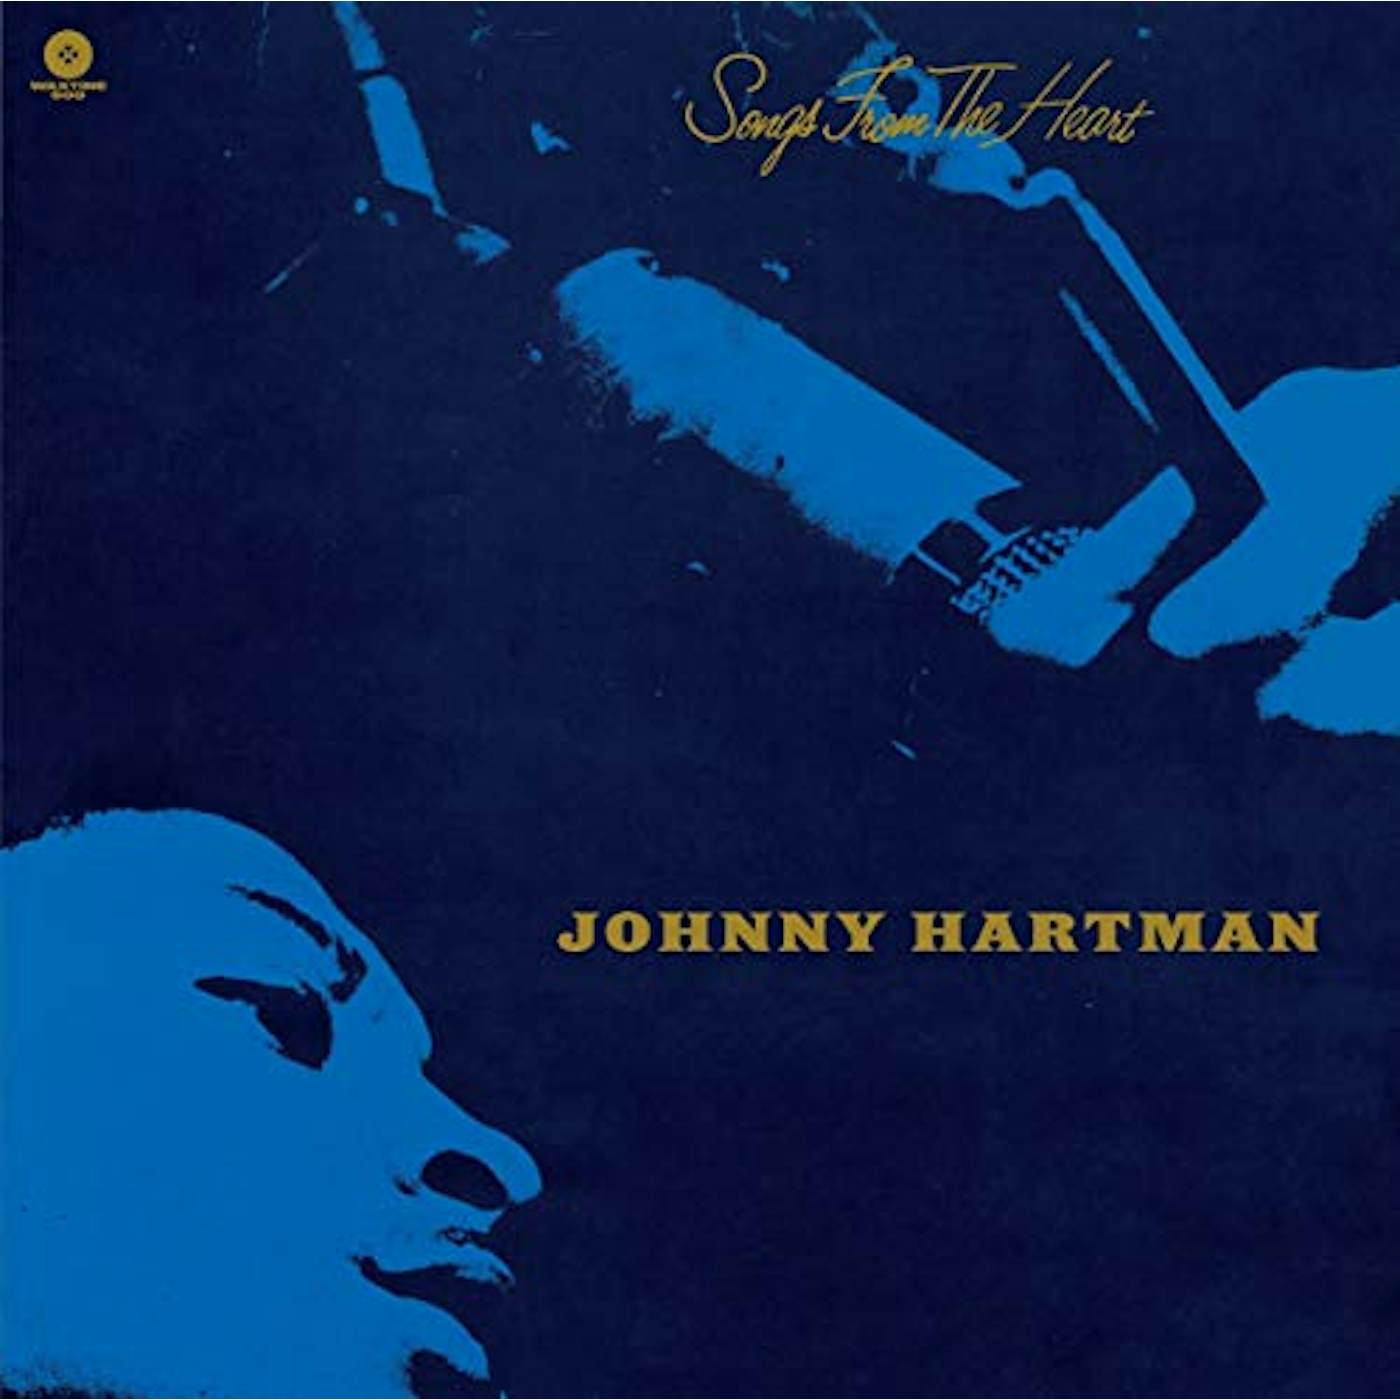 Johnny Hartman SONGS FROM THE HEART (AUDP) (BONUS TRACKS) Vinyl Record - Limited Edition